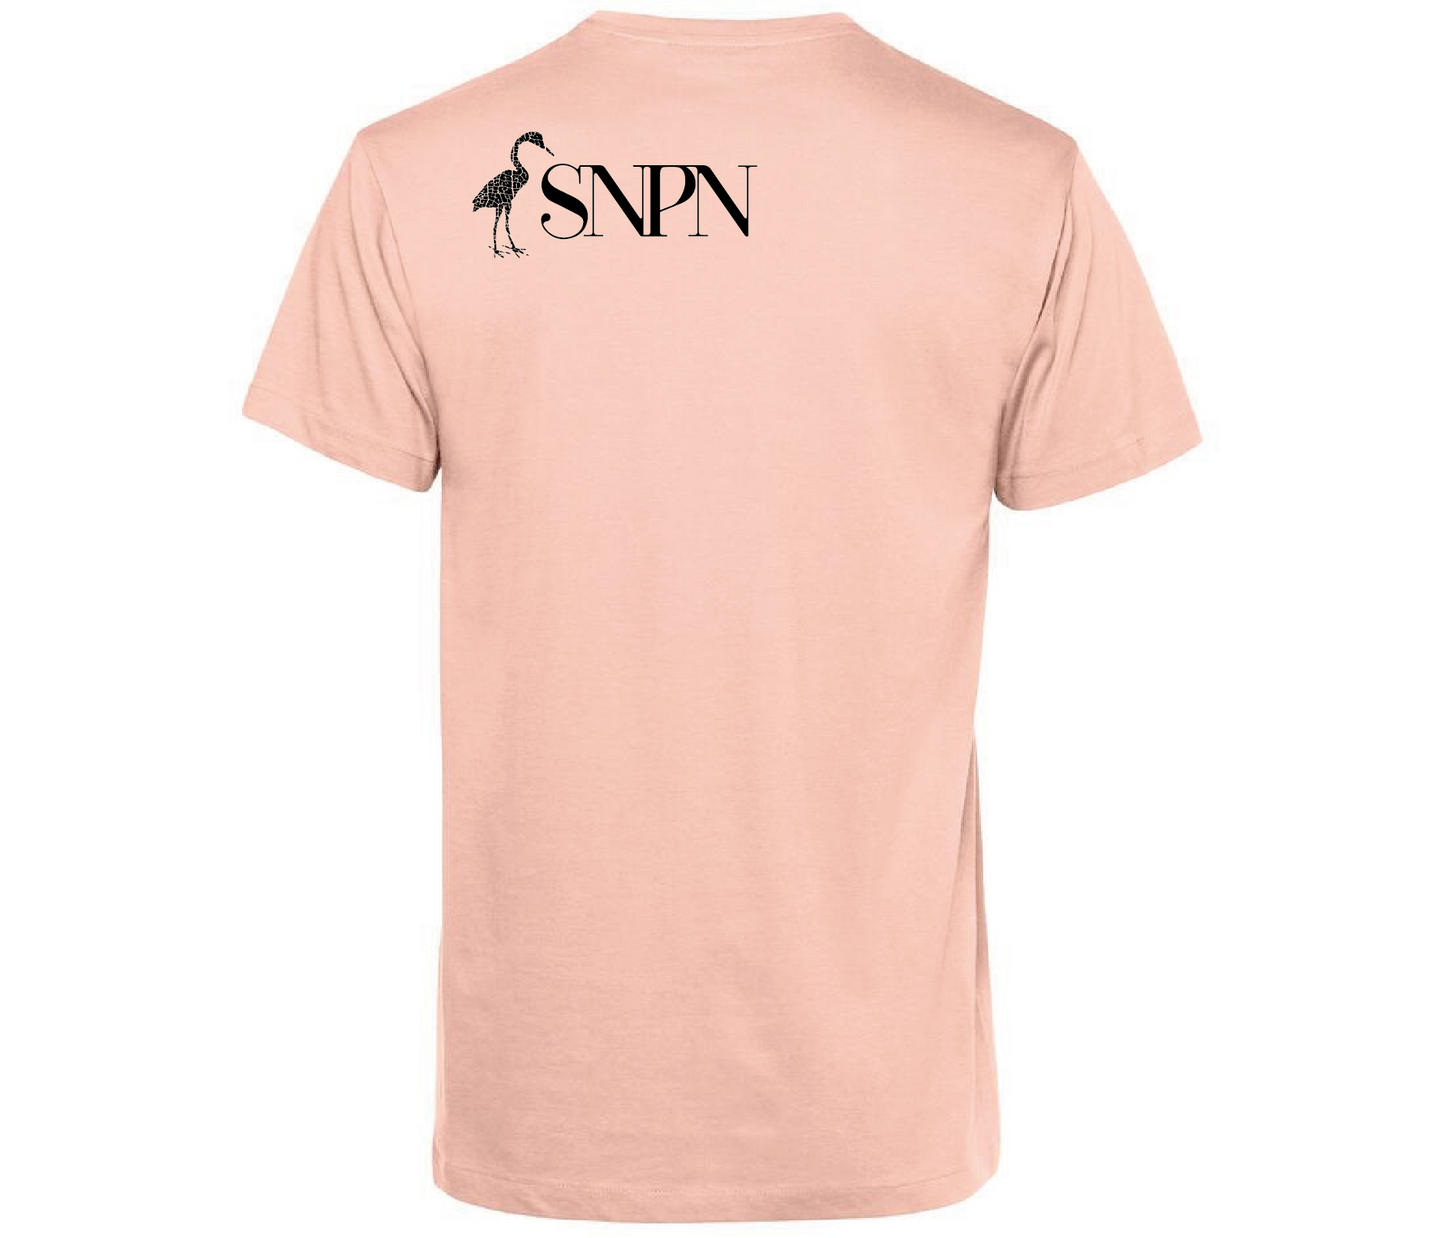 T-shirt SNPN Rose - Unisexe